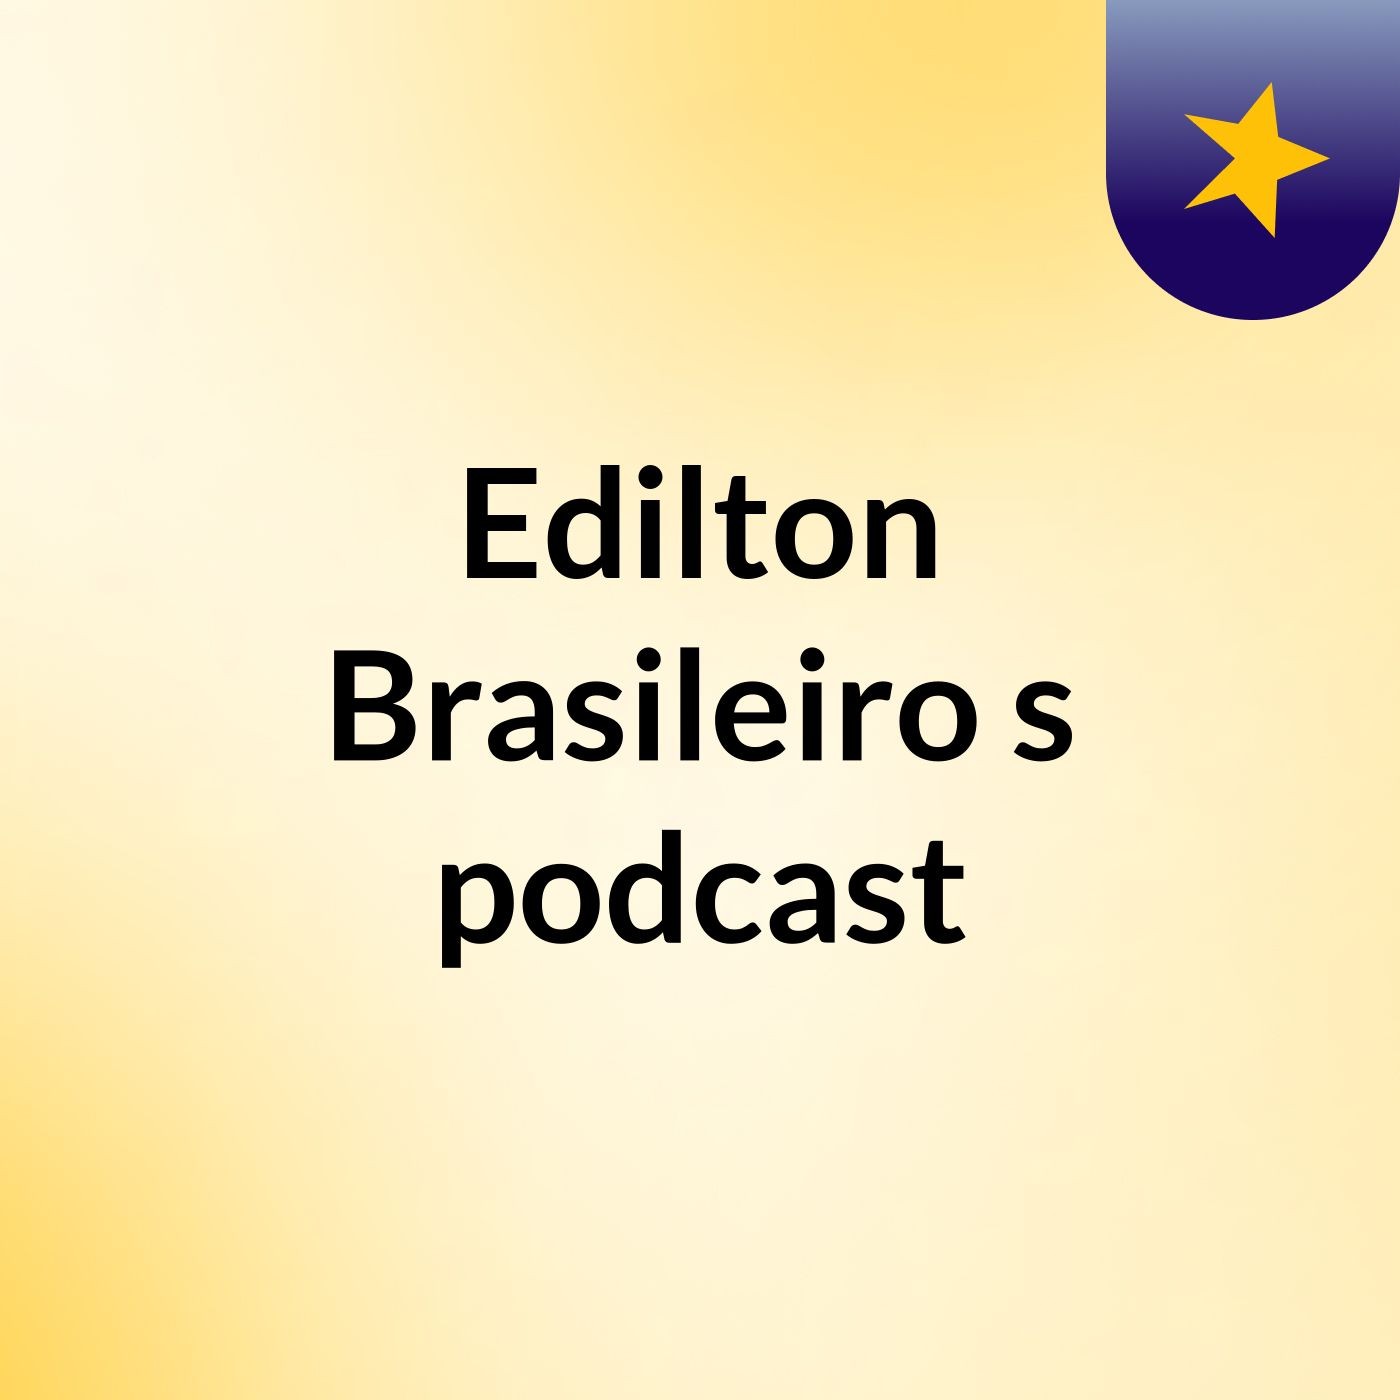 Edilton Brasileiro's podcast